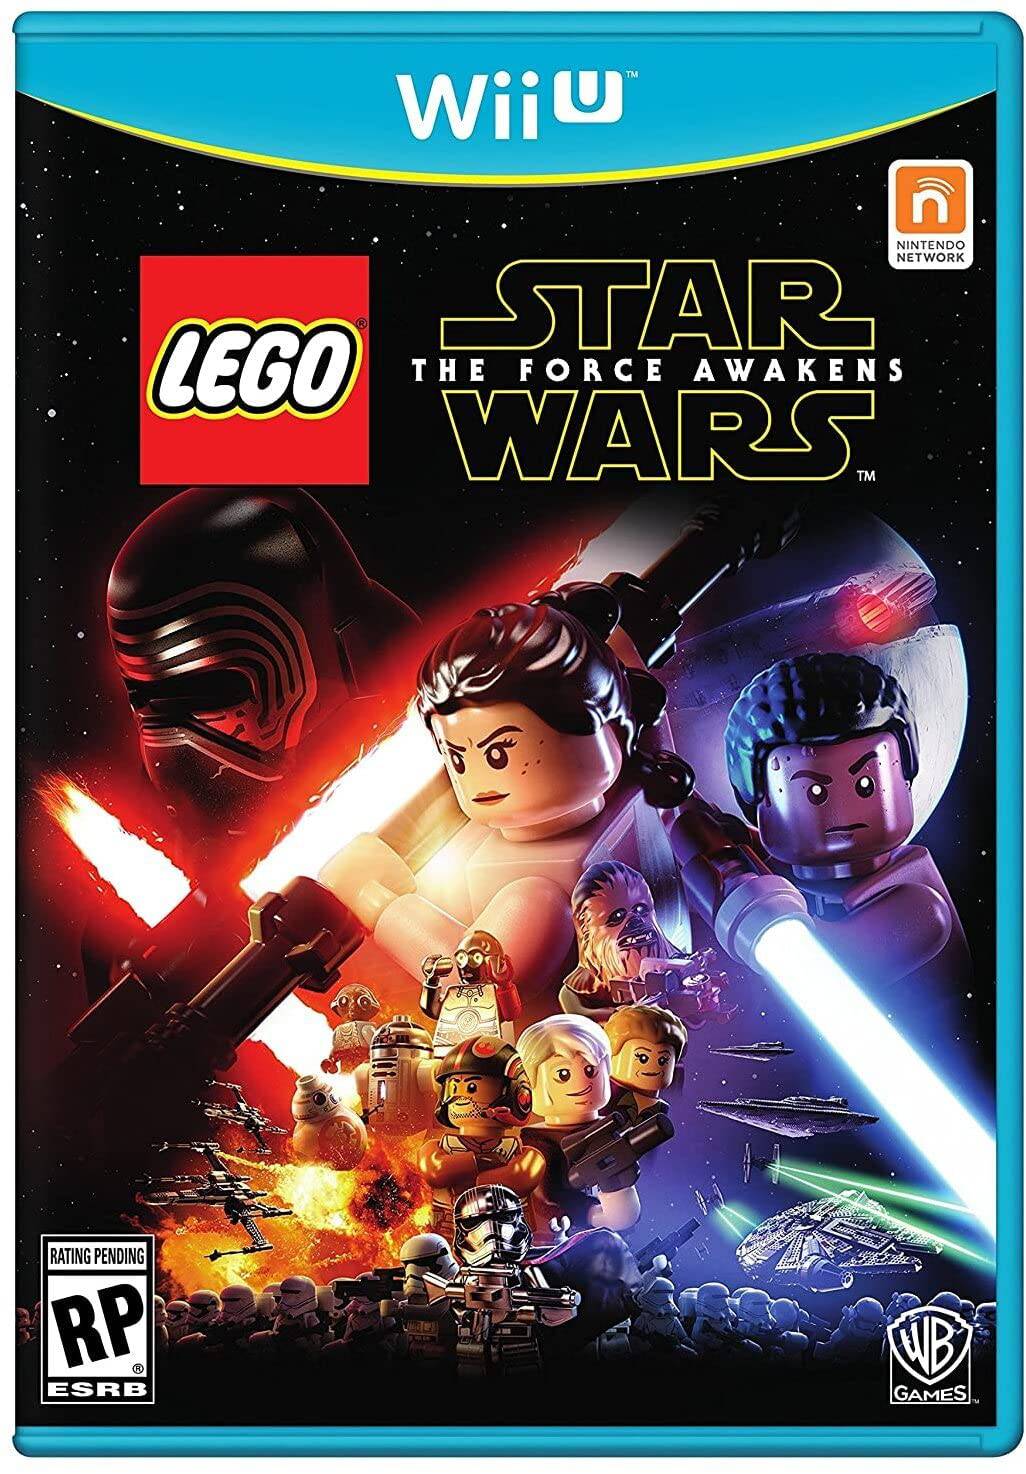 LEGO Star Wars: The Force Awakens - Wii U Standard Edition King Gaming